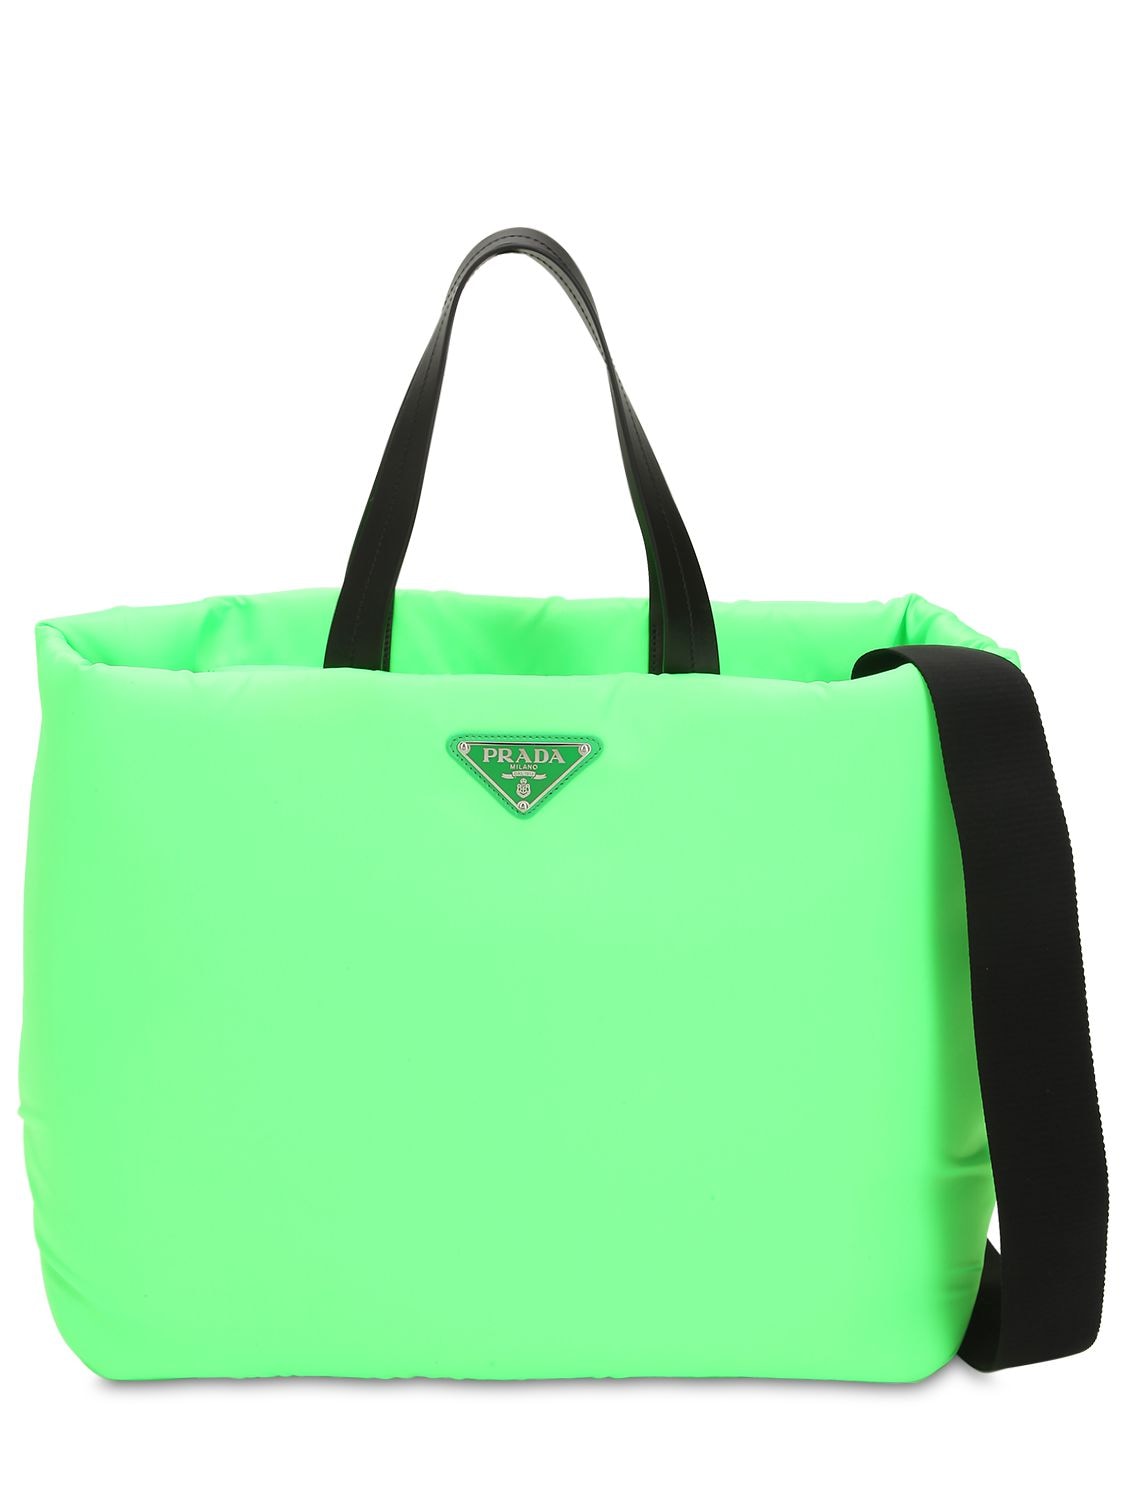 Prada Puffer Nylon Tote Bag In Neon Green | ModeSens